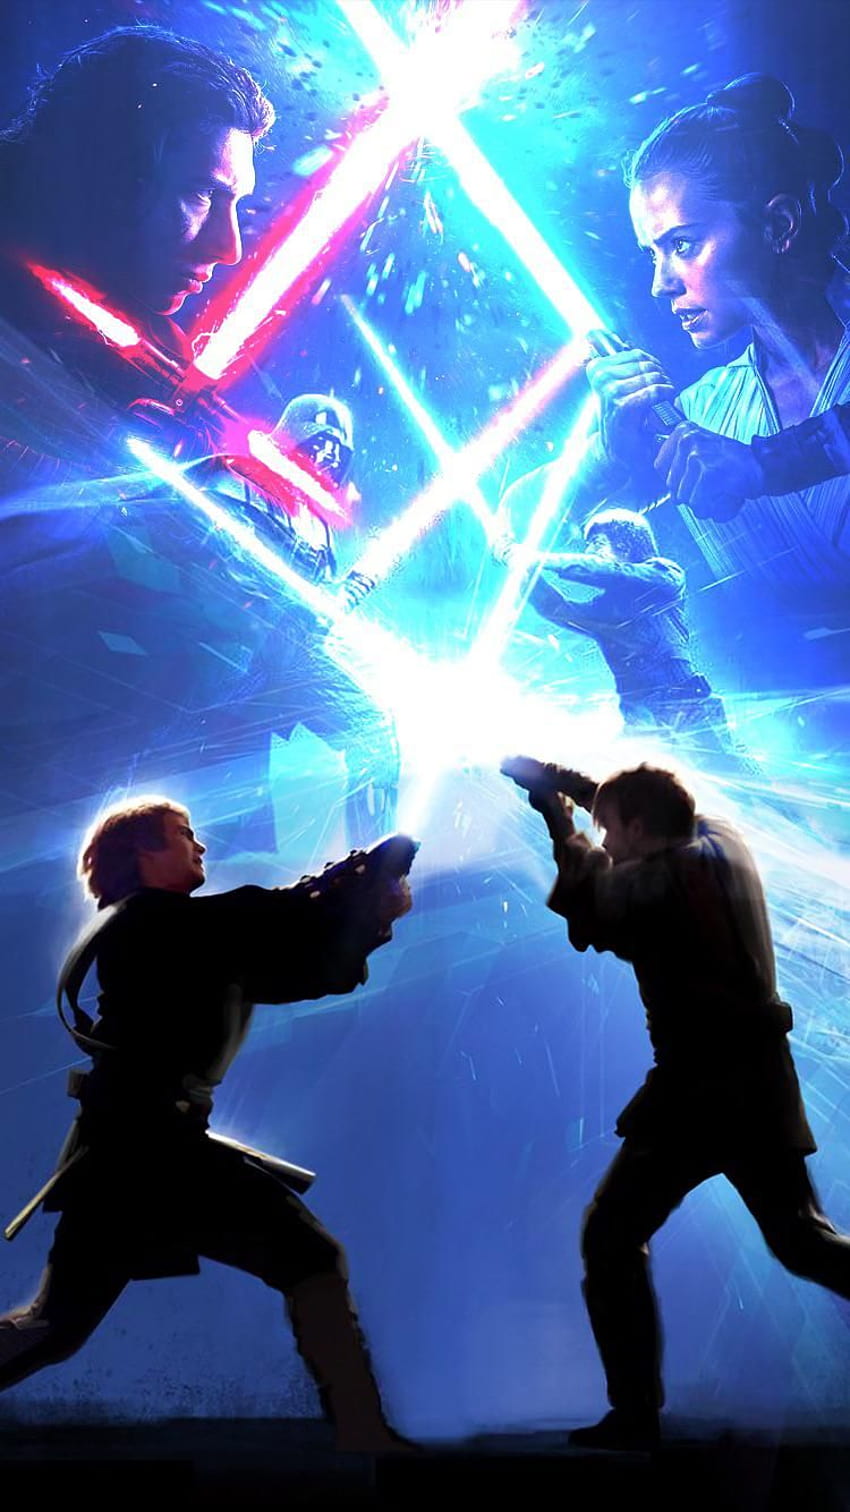 Wallpaper ObiWan Kenobi Ewan McGregor Star Wars Episode IV  A New Hope  Darth Vader Disney Movies Background  Download Free Image